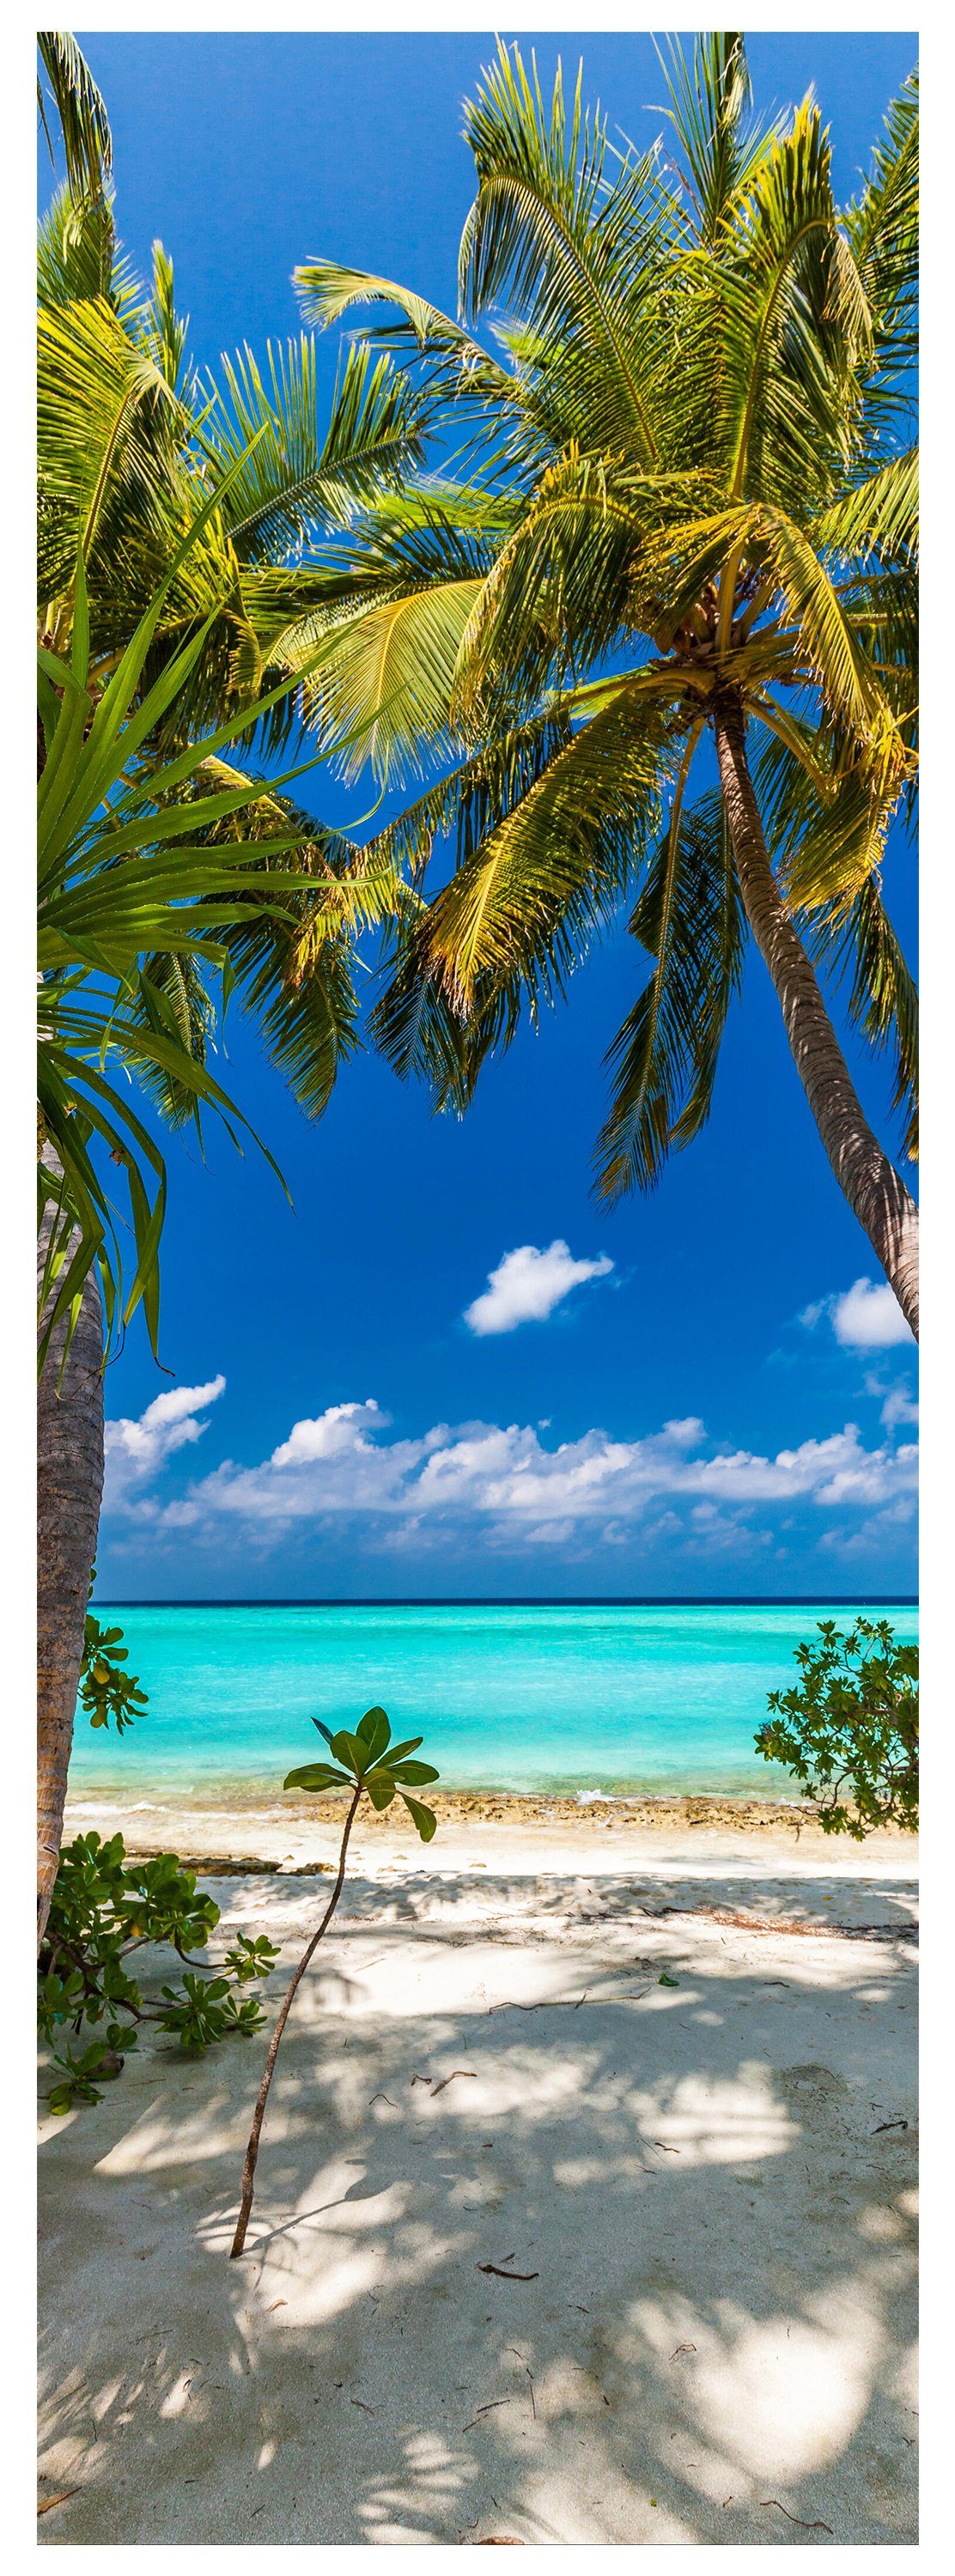 wandmotiv24 Türtapete Blick aufs Meer, Palmen, Wandtapete, glatt, Motivtapete, Paradies, Dekorfolie selbstklebende matt, Fototapete, Sand